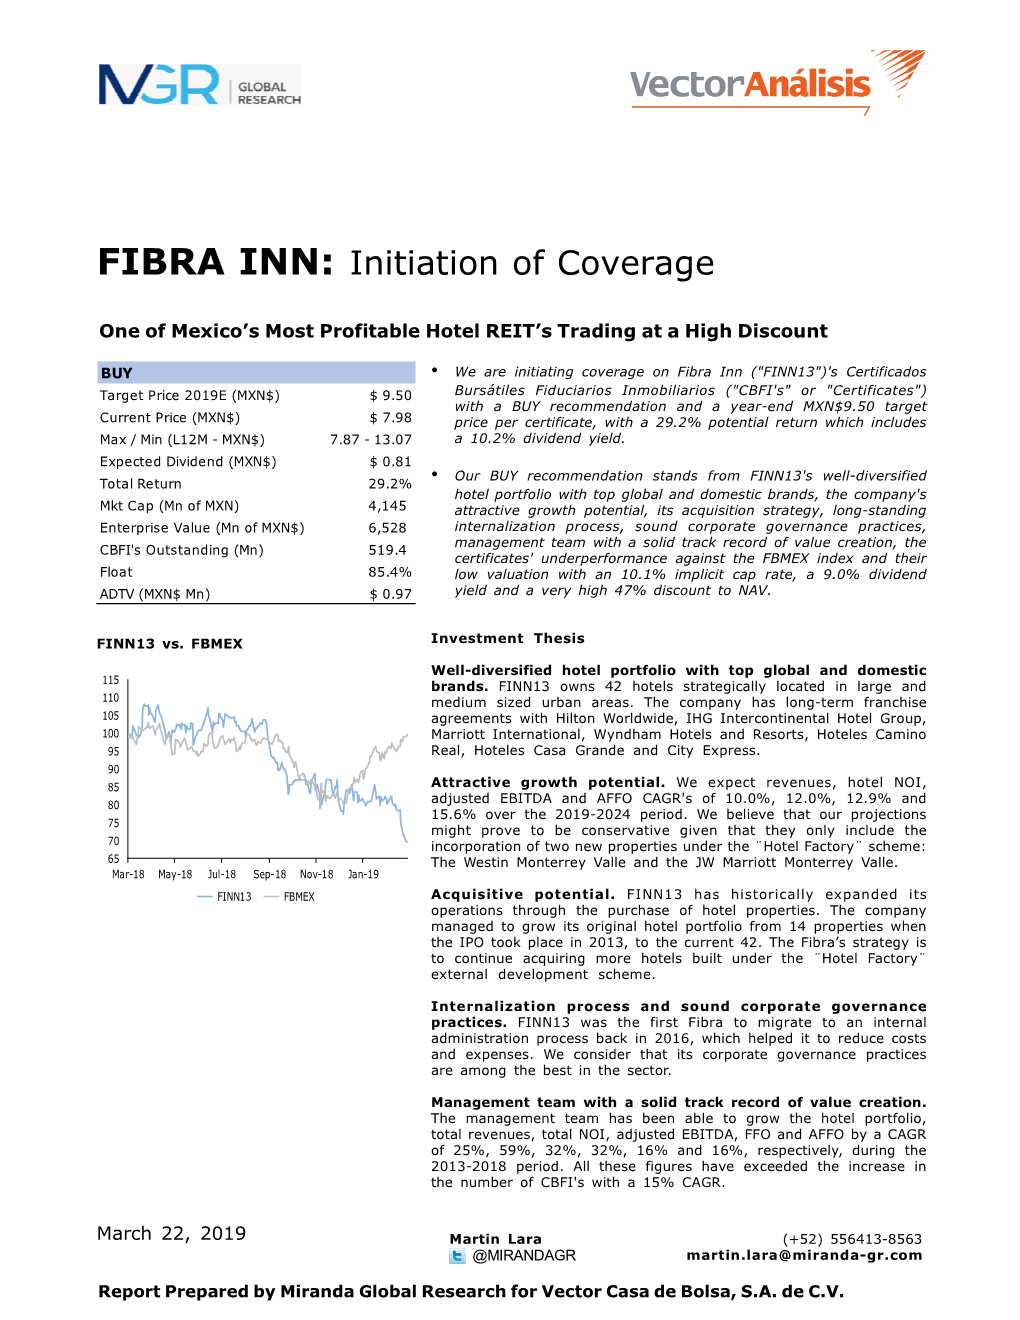 Fibra Inn – Initiation of Coverage